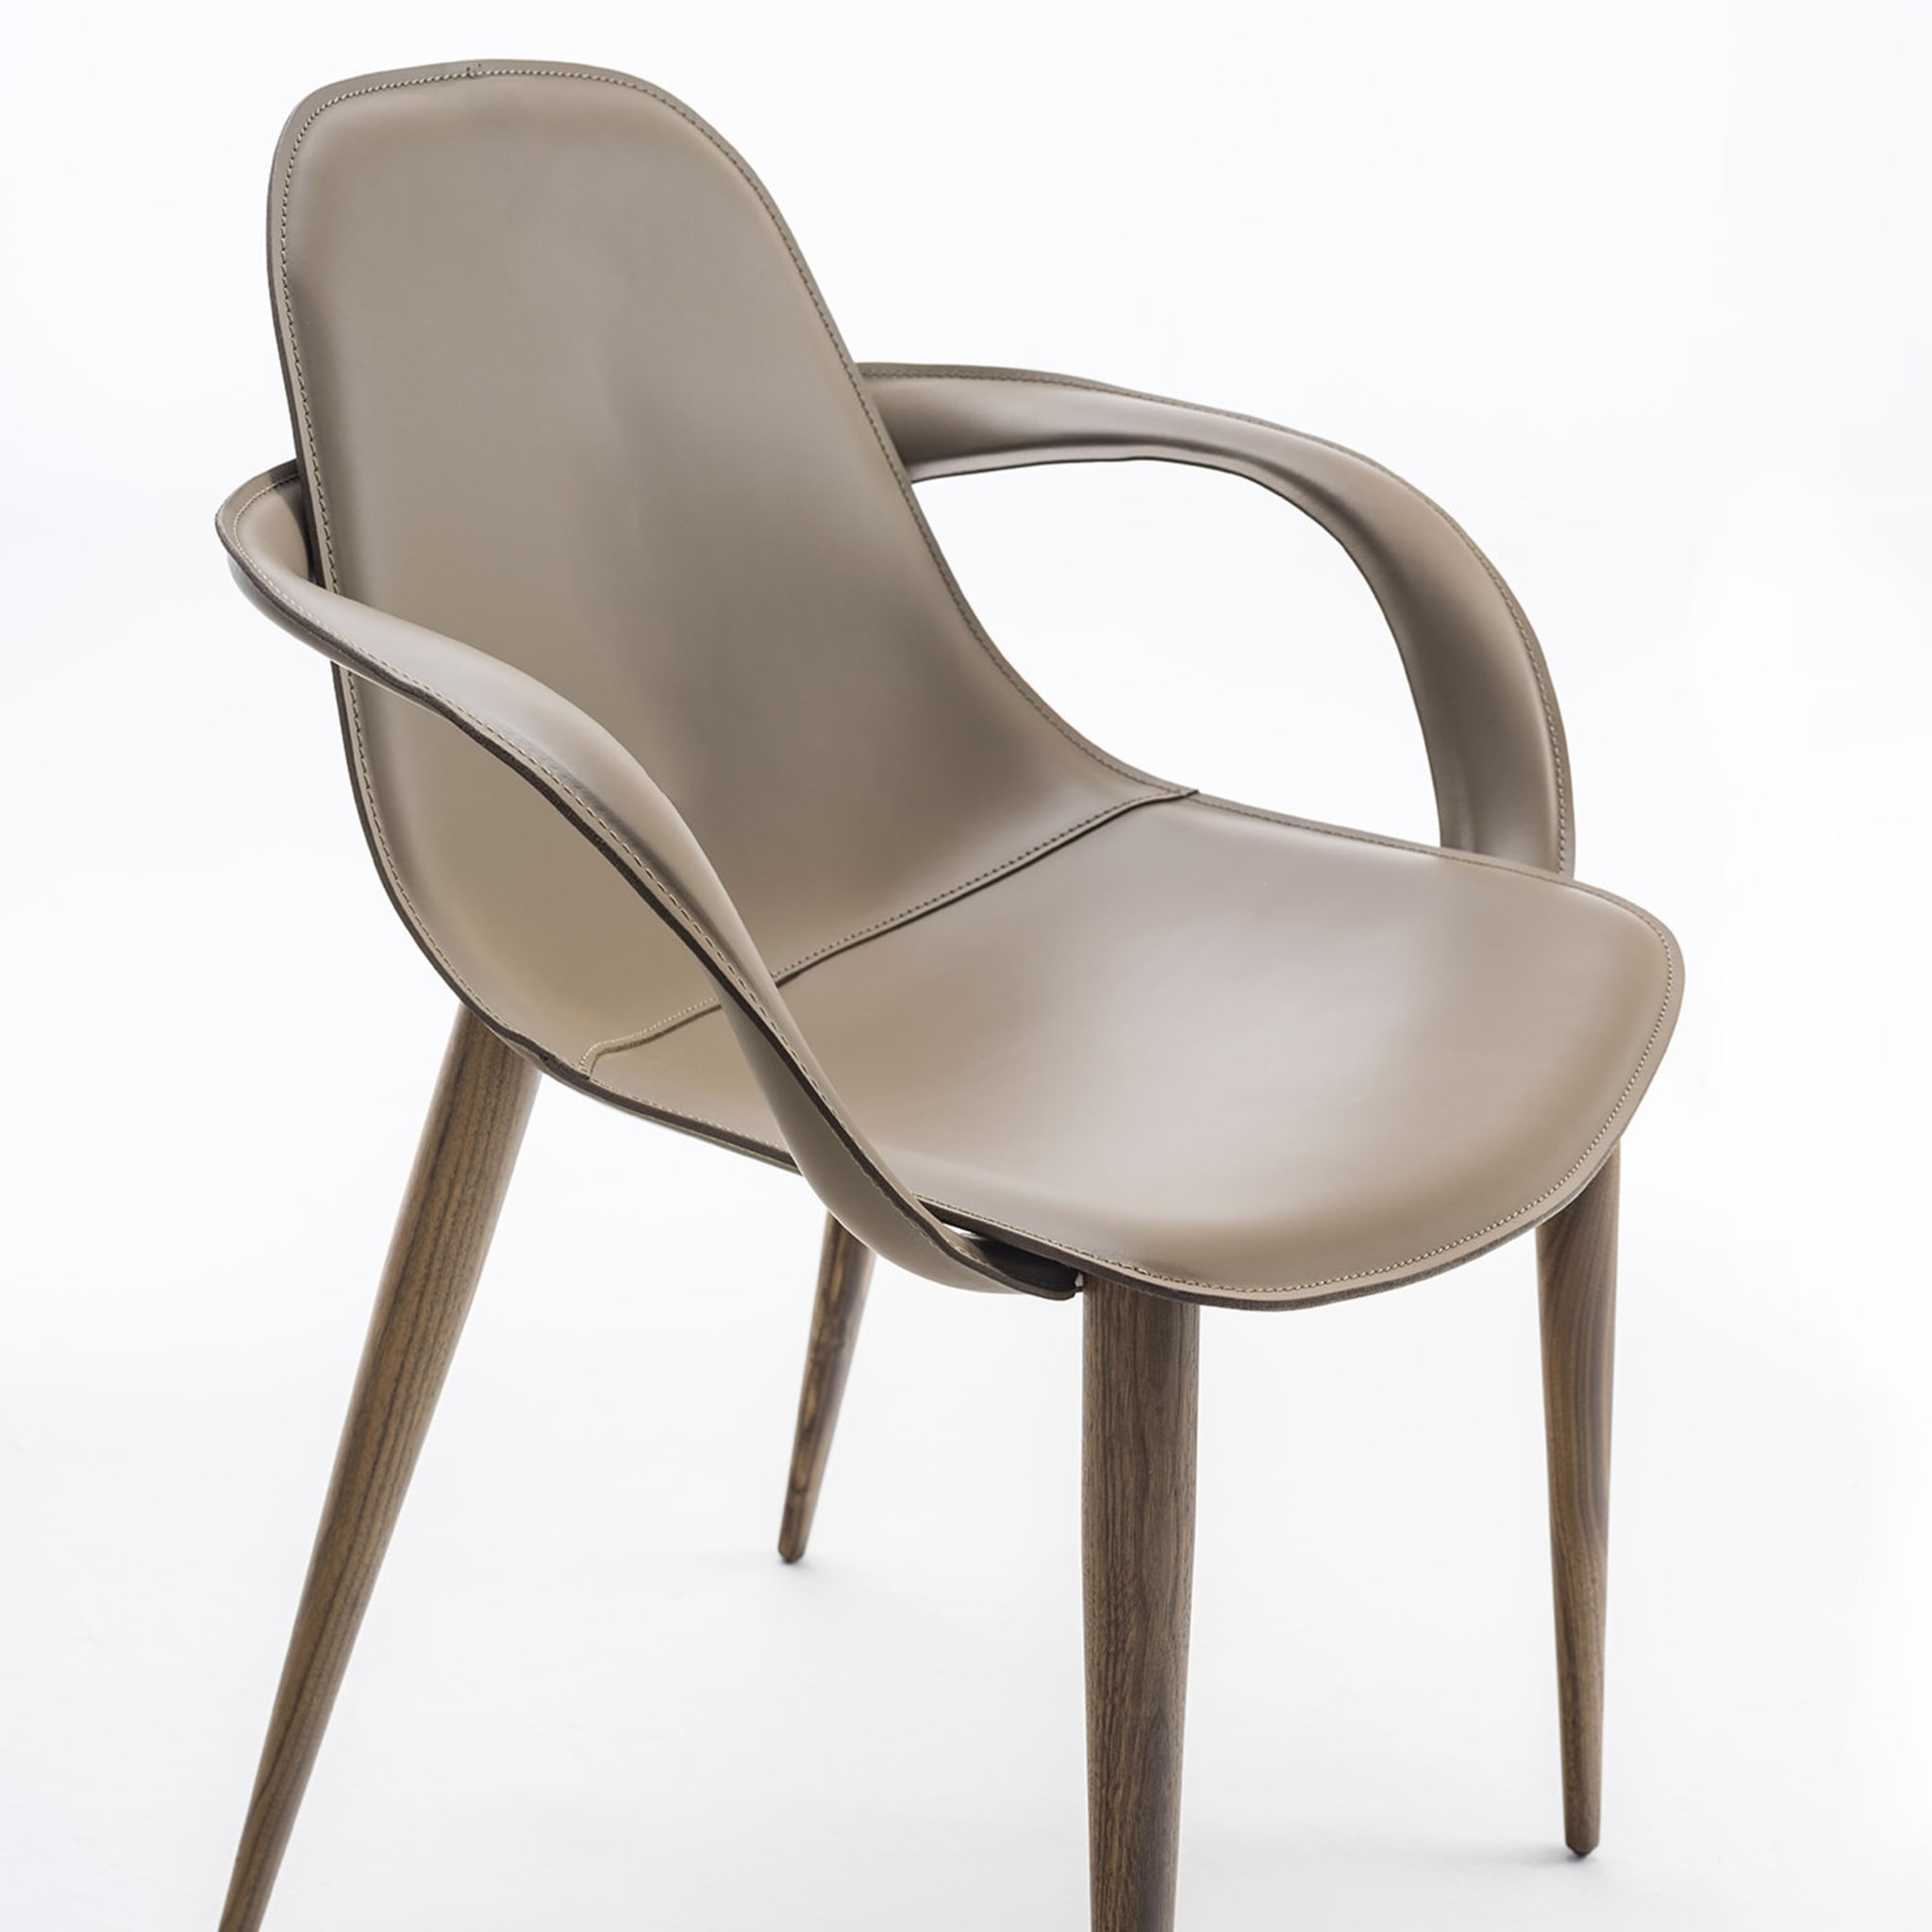 Couture Wooden-Legged Chair by Stefano Bigi - Alternative view 3